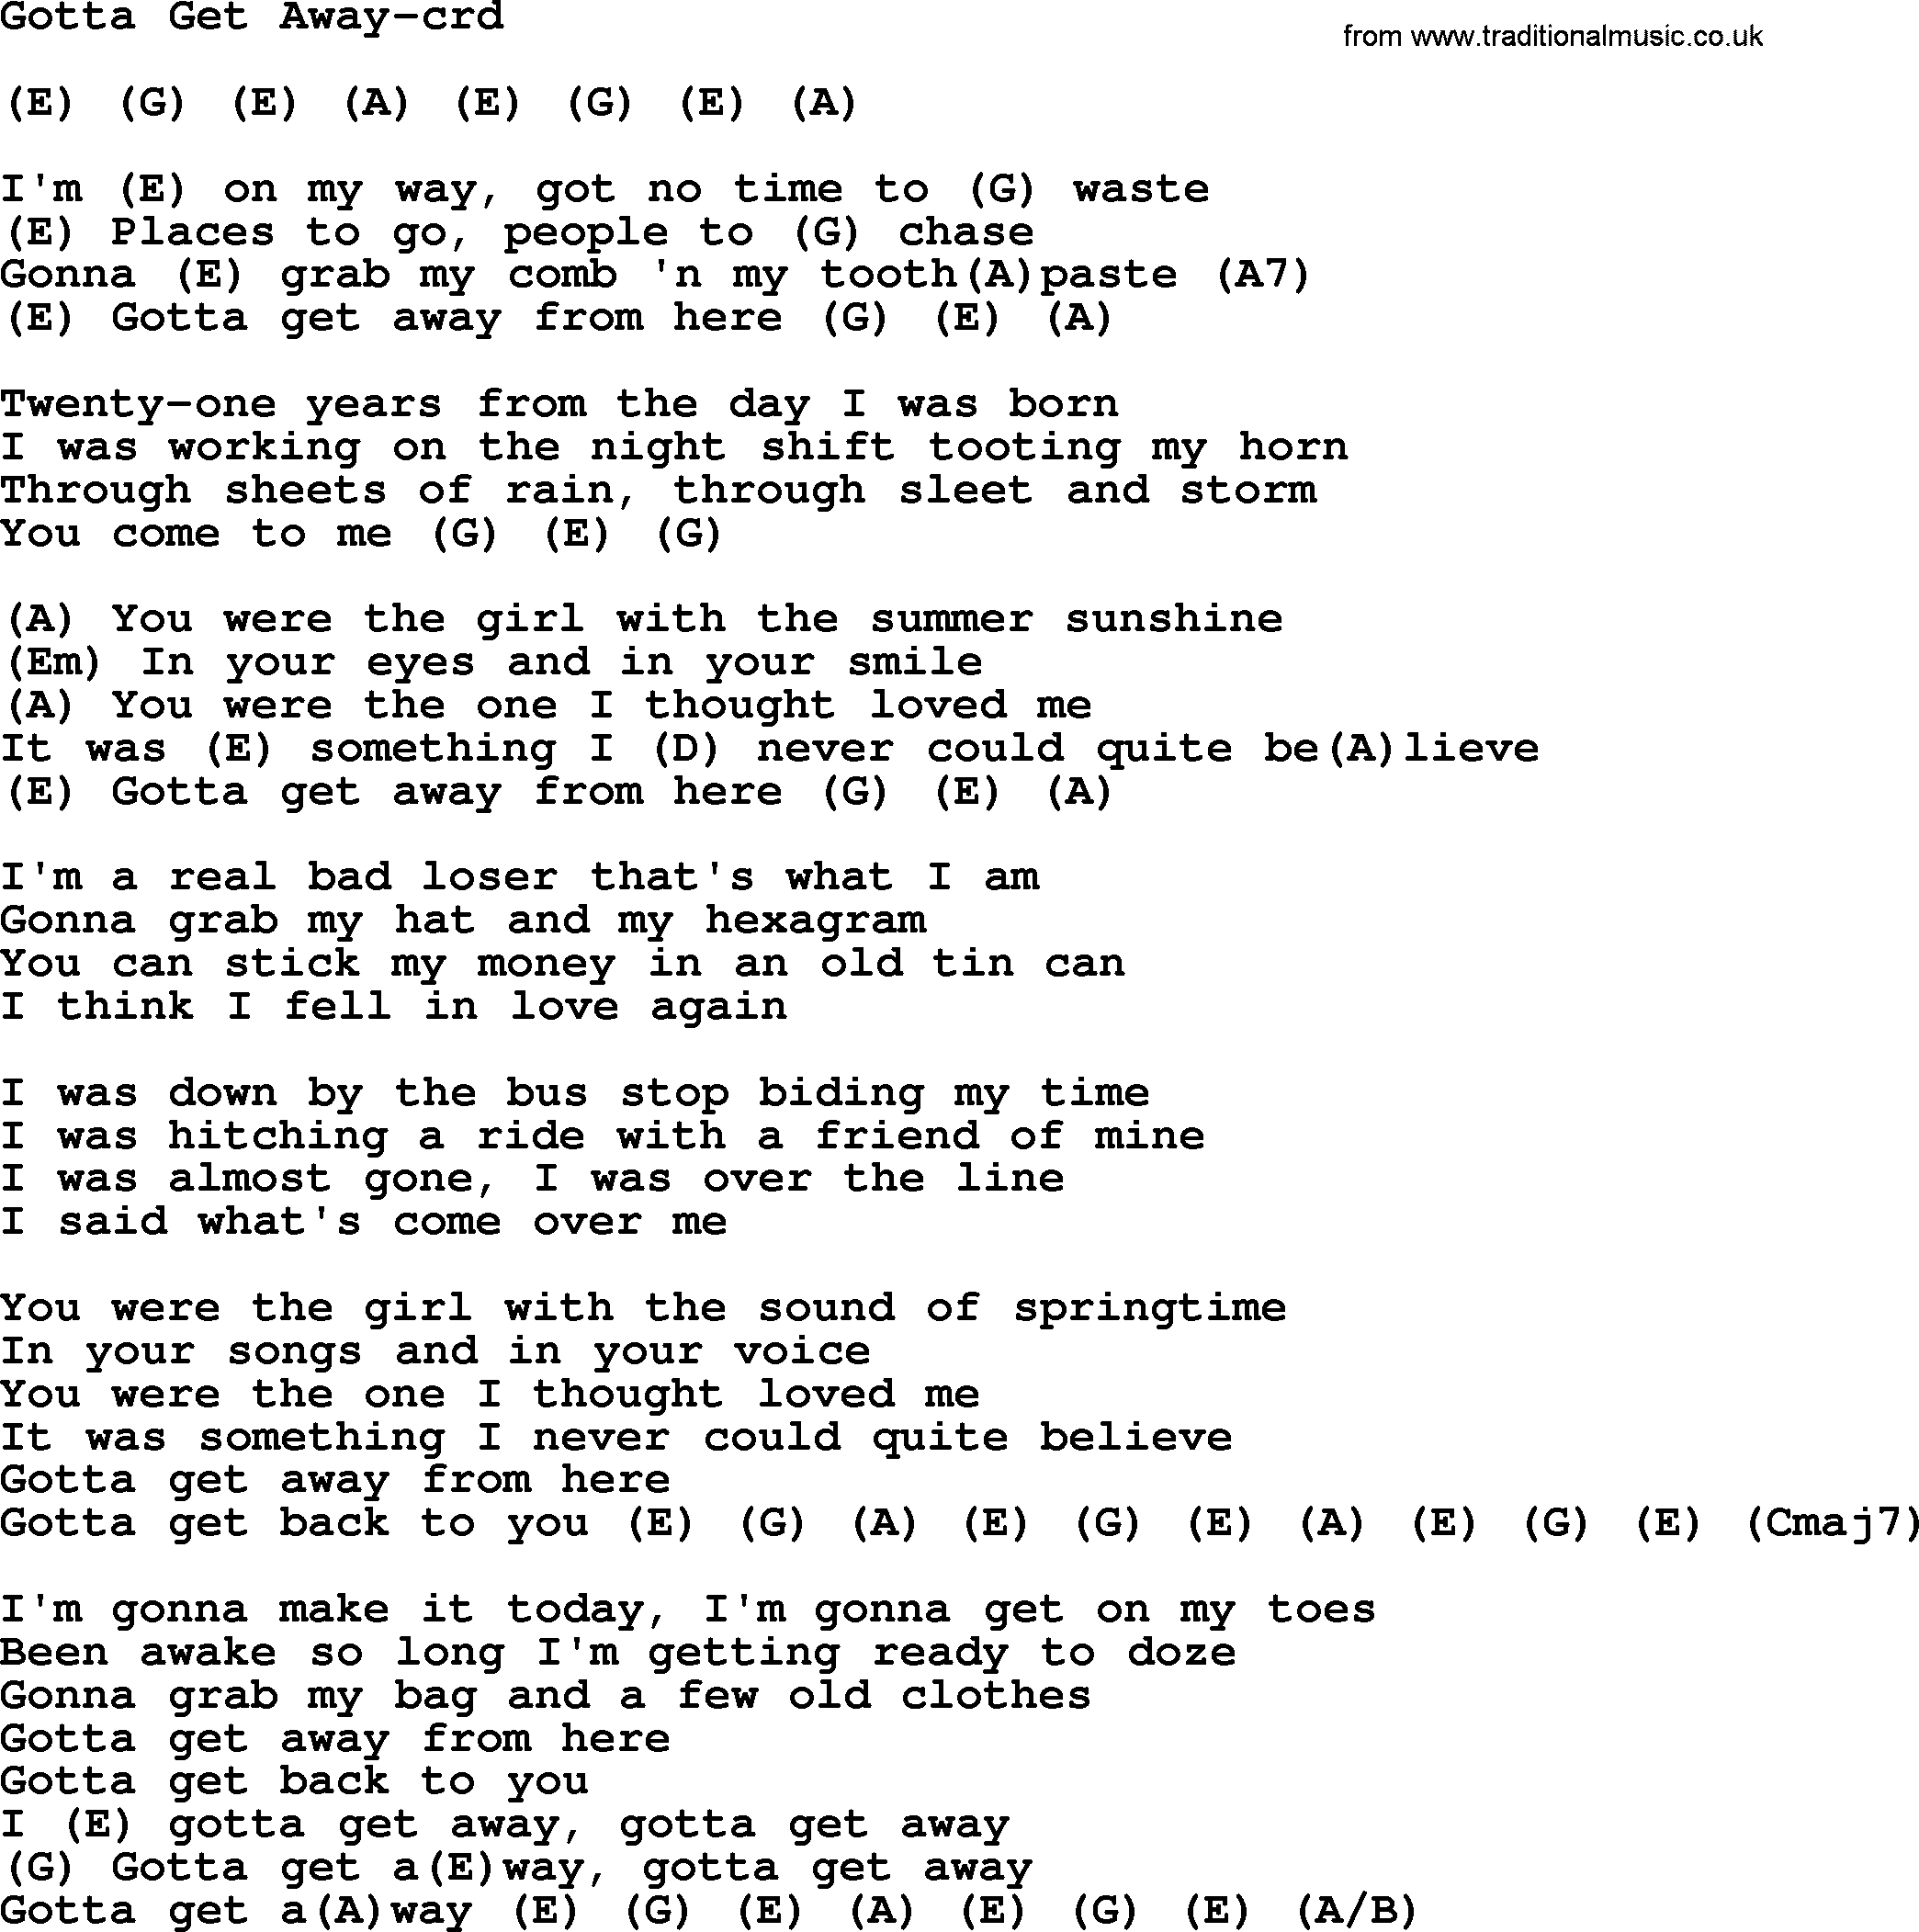 Gordon Lightfoot song Gotta Get Away, lyrics and chords